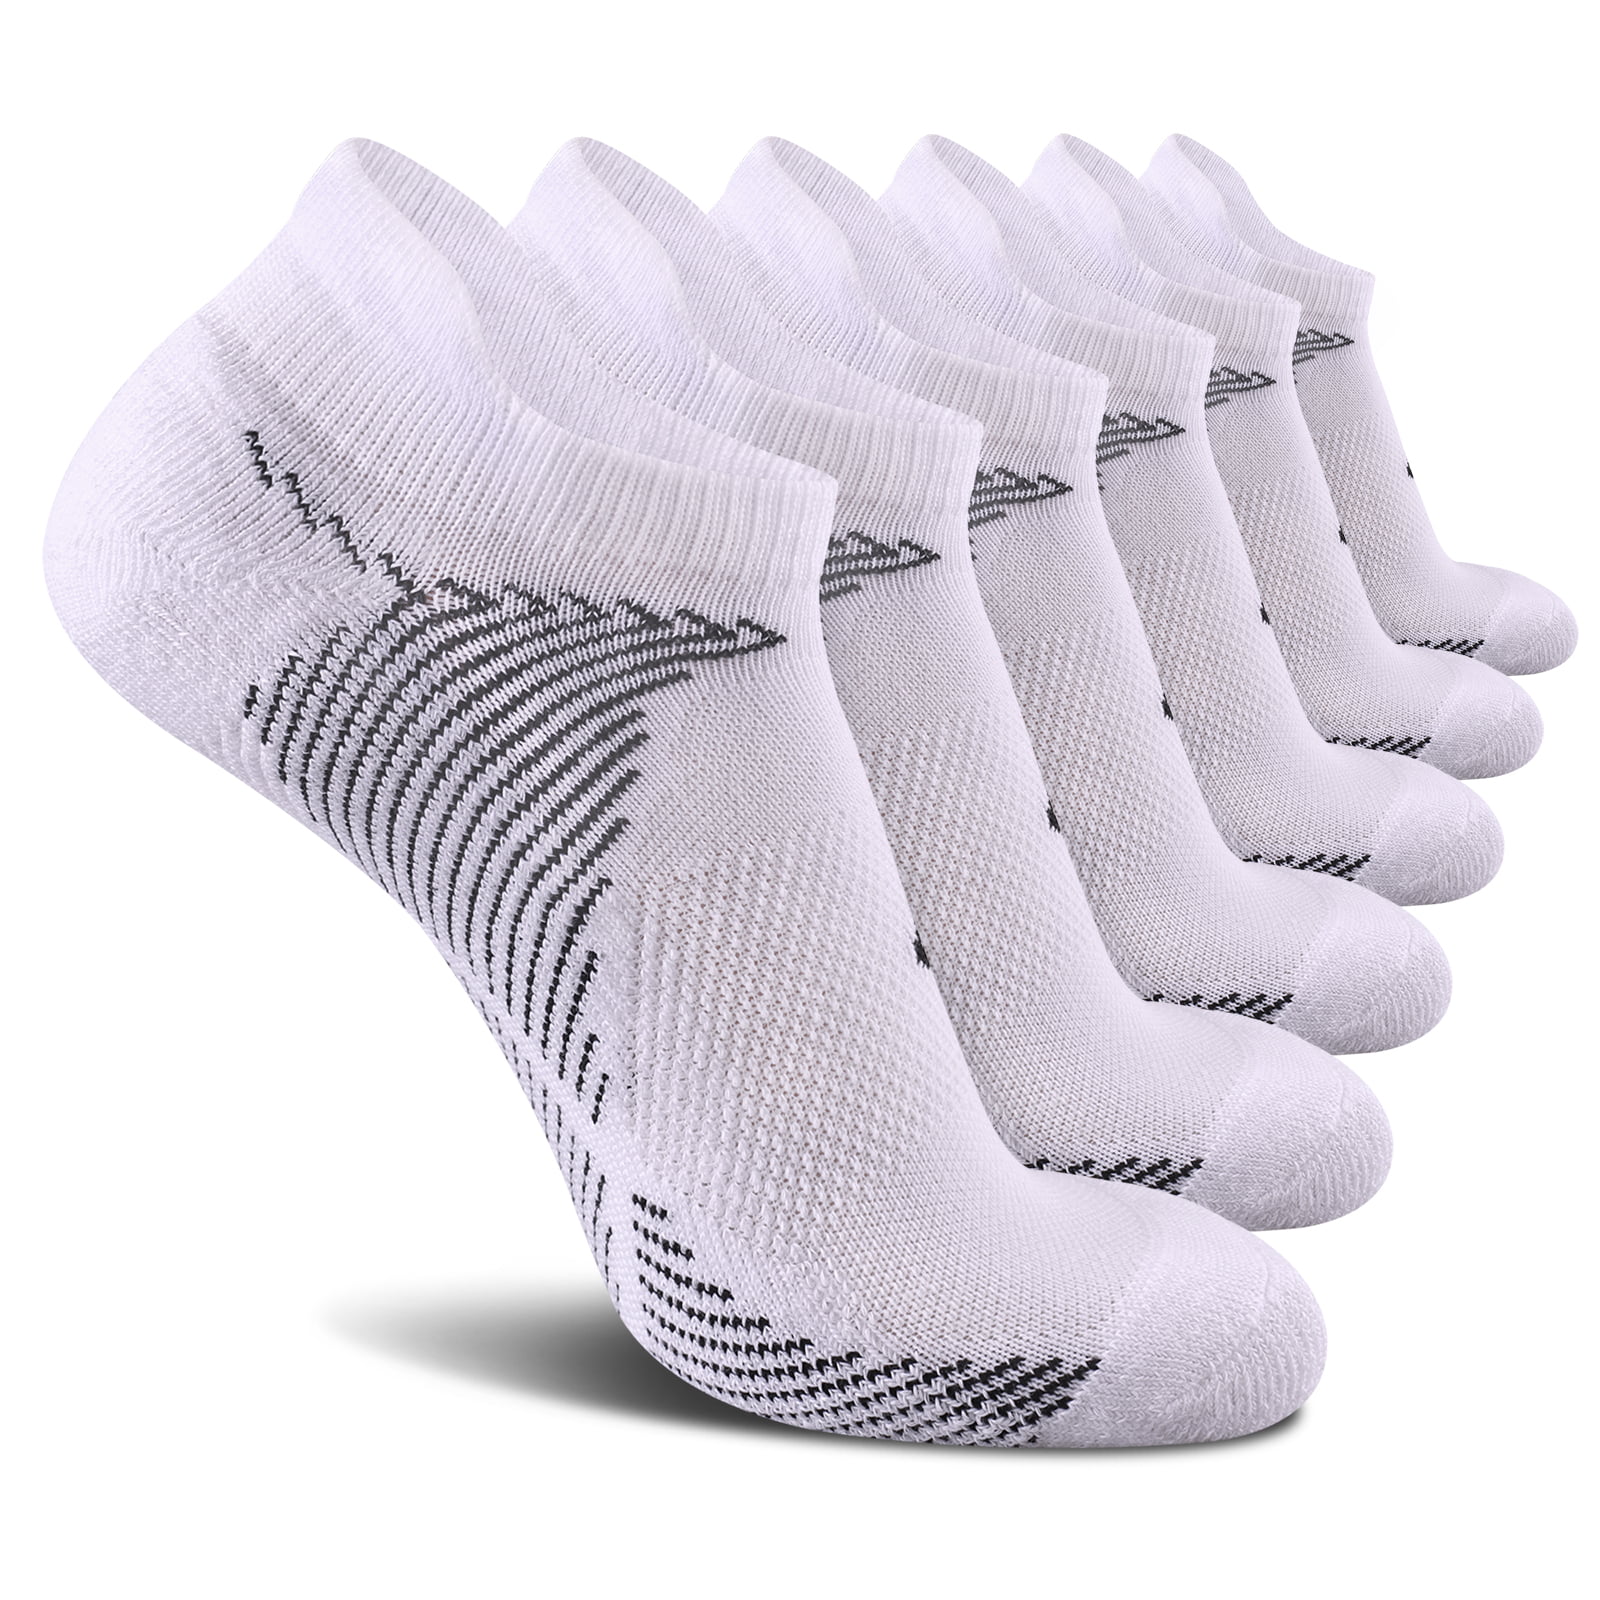 Womens & Mens Medium Solid Color Baseball Socks Sock Size 9-11 2 PAIR 